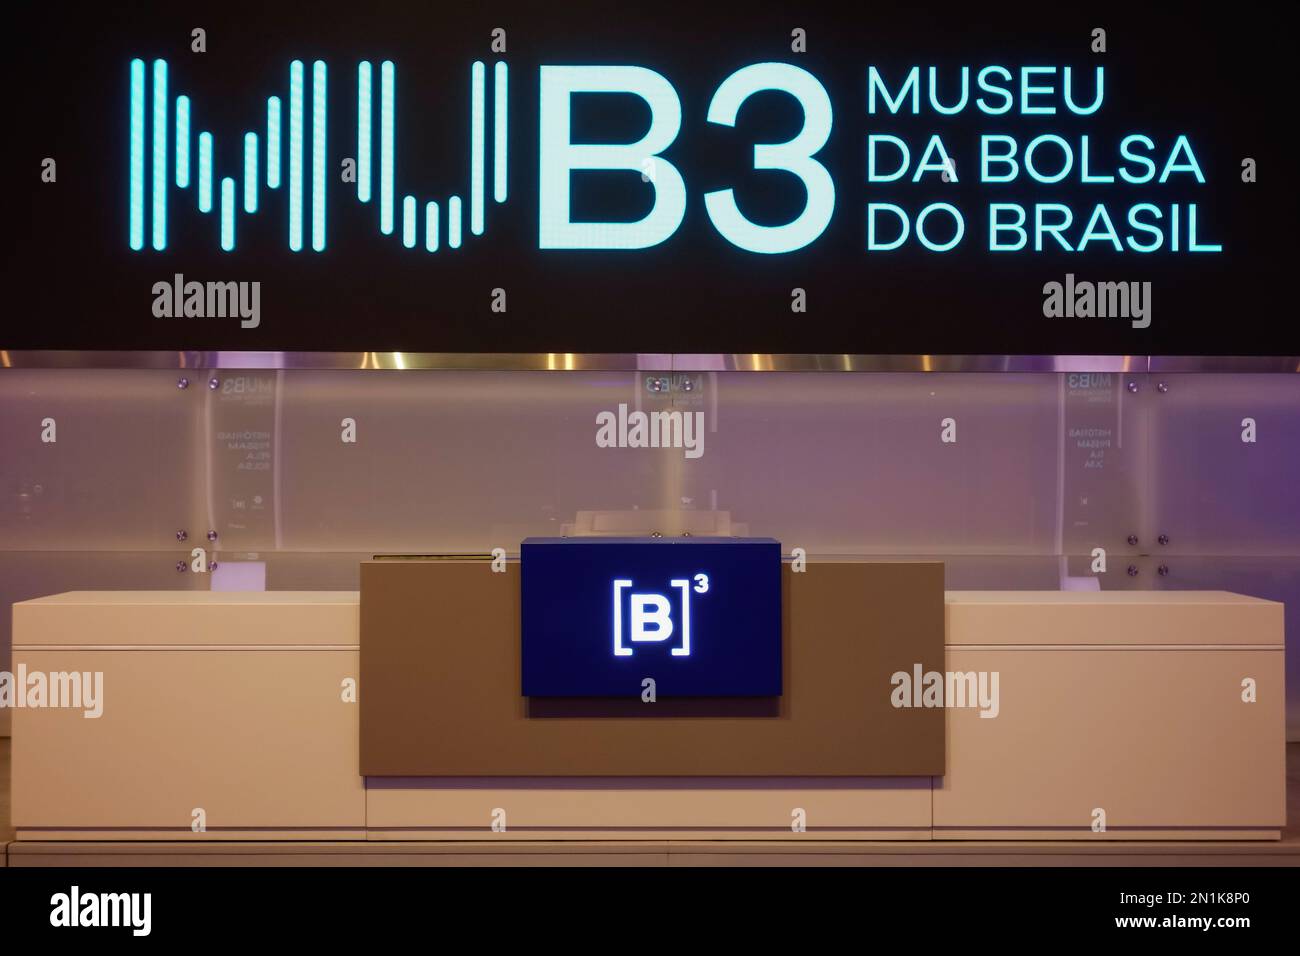 Sao Paulo, Brazil - 01.28.23: Museum of brazilian B3 Bovespa stock exchange. Museu da Bolsa do Brasil Stock Photo